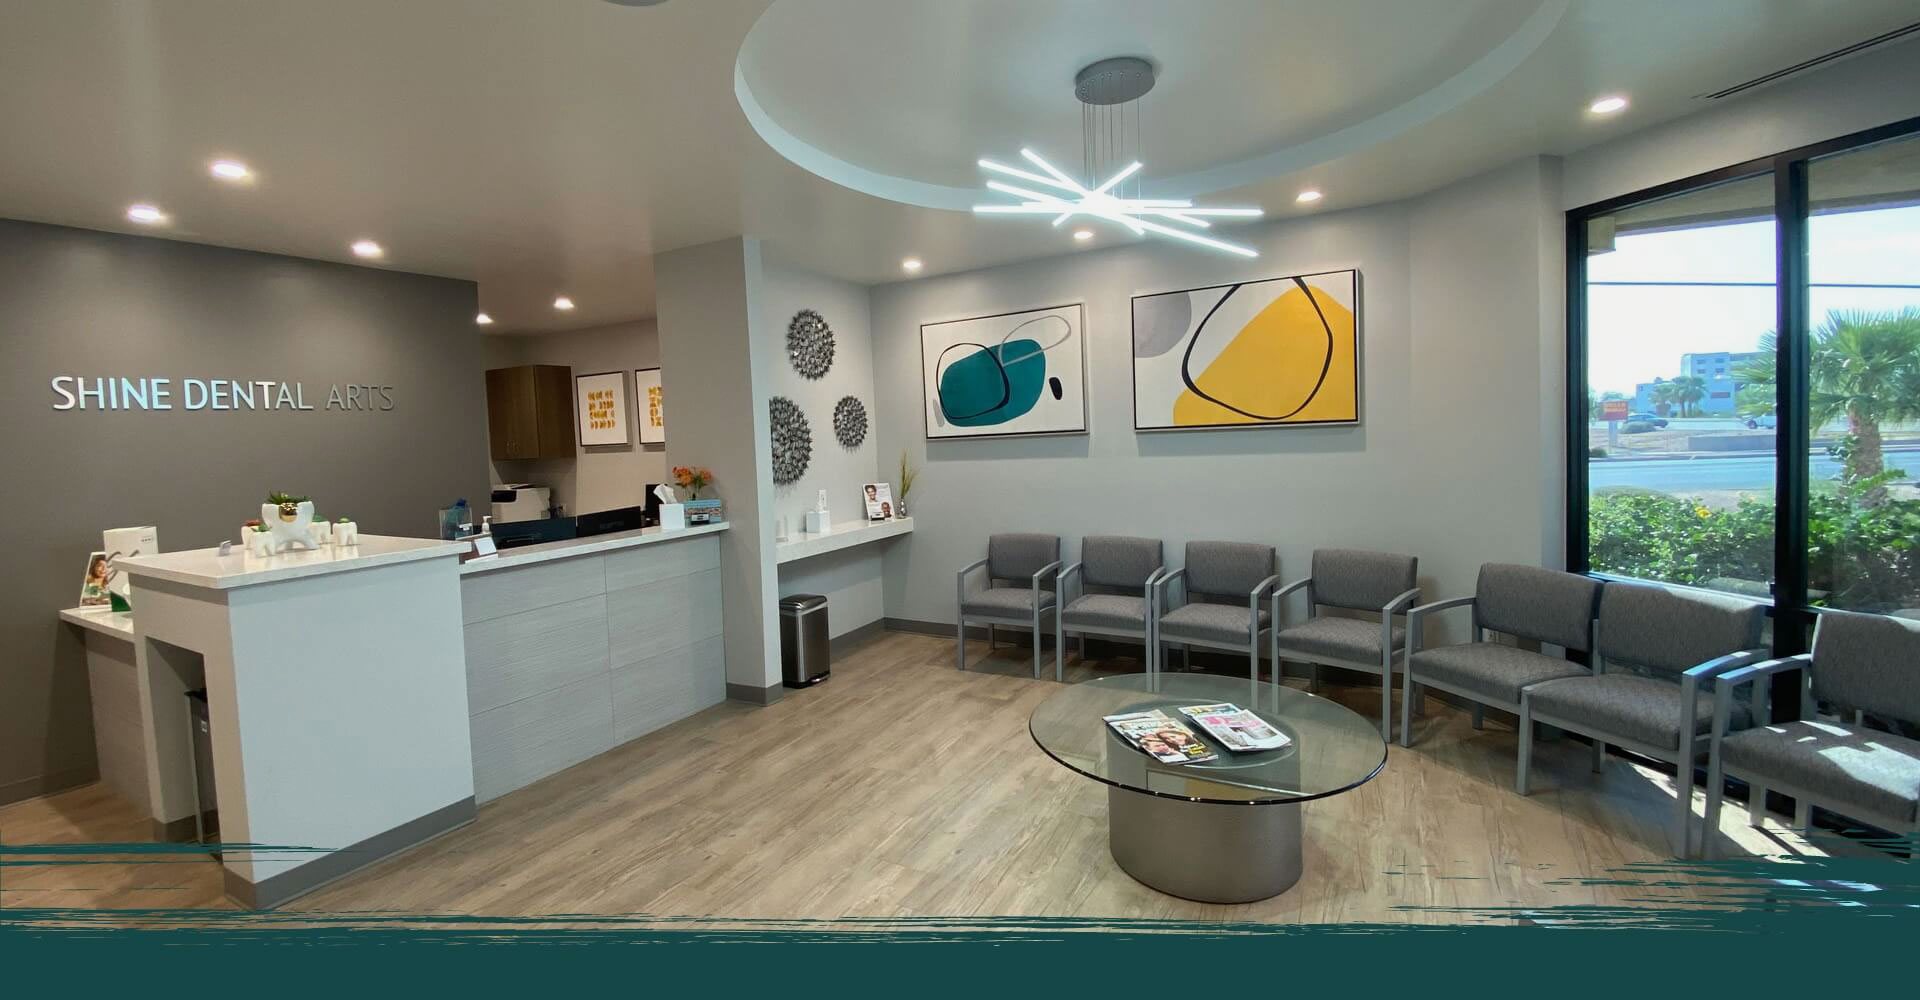 Shine dental arts reception area